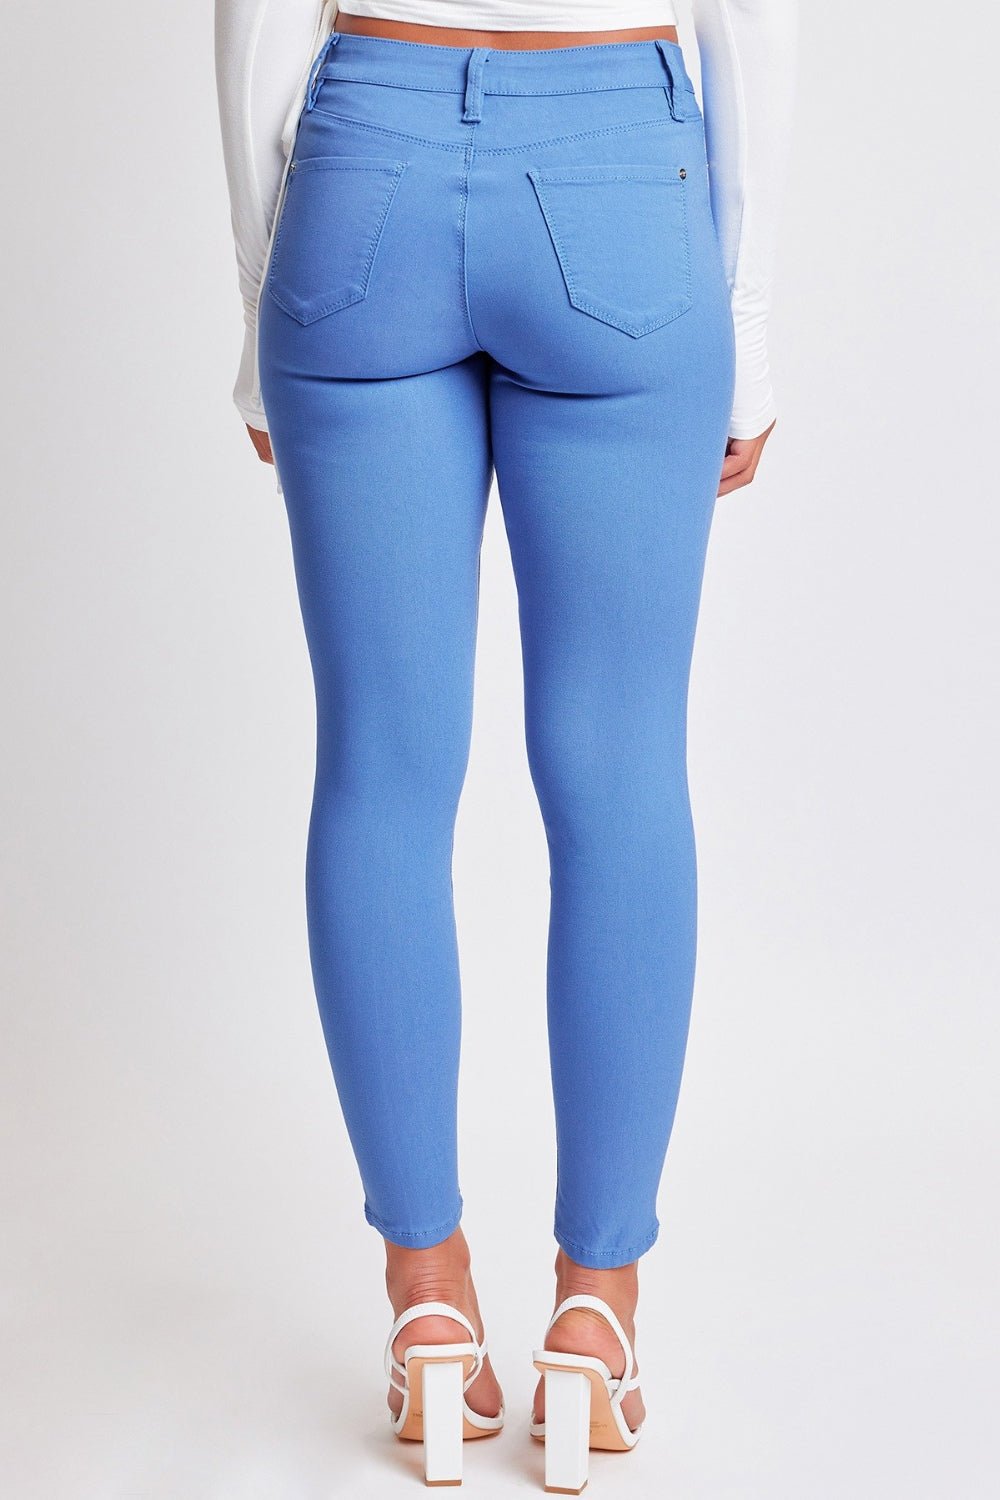 Hyperstretch Mid-Rise Skinny Pants in BluePantsYMI Jeanswear